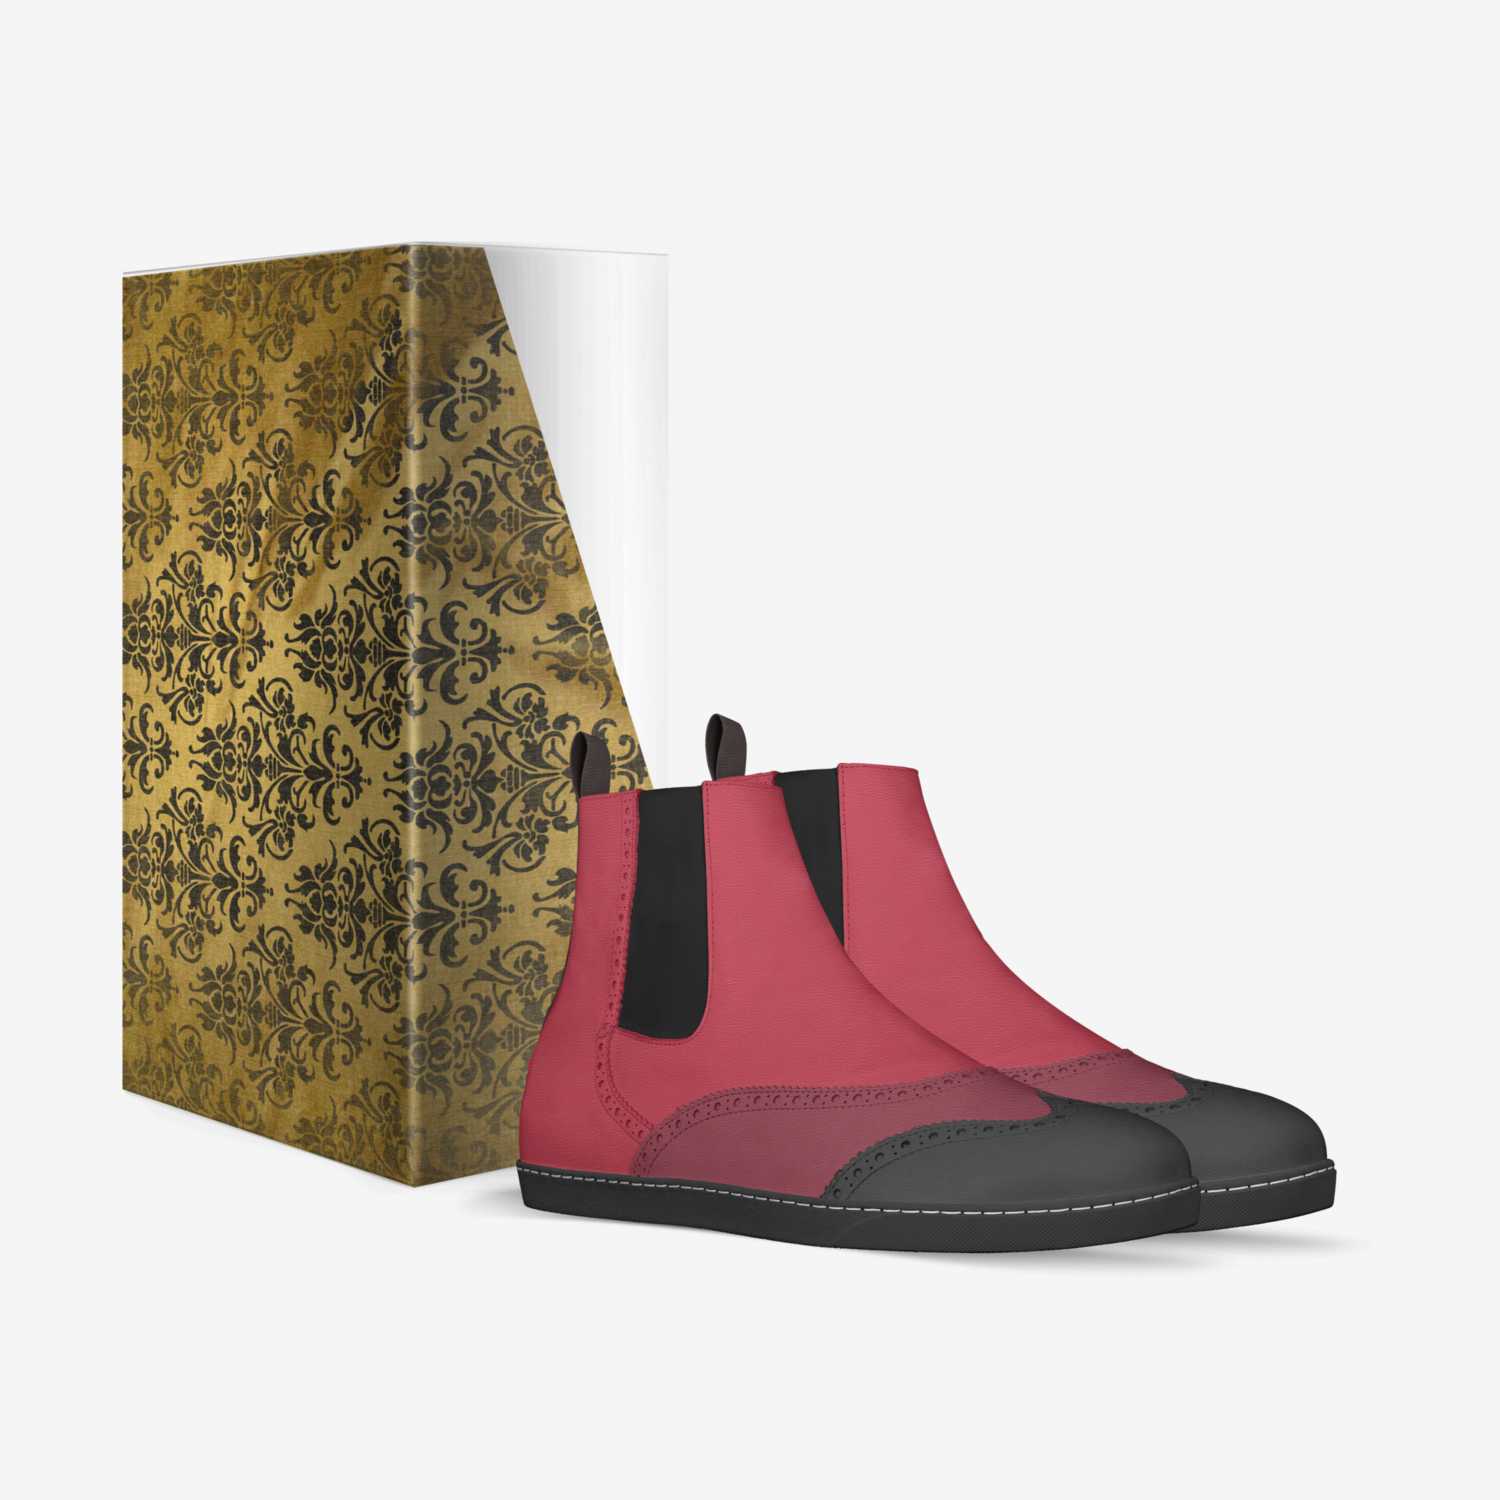 V1 custom made in Italy shoes by Valerio Nobiloni | Box view